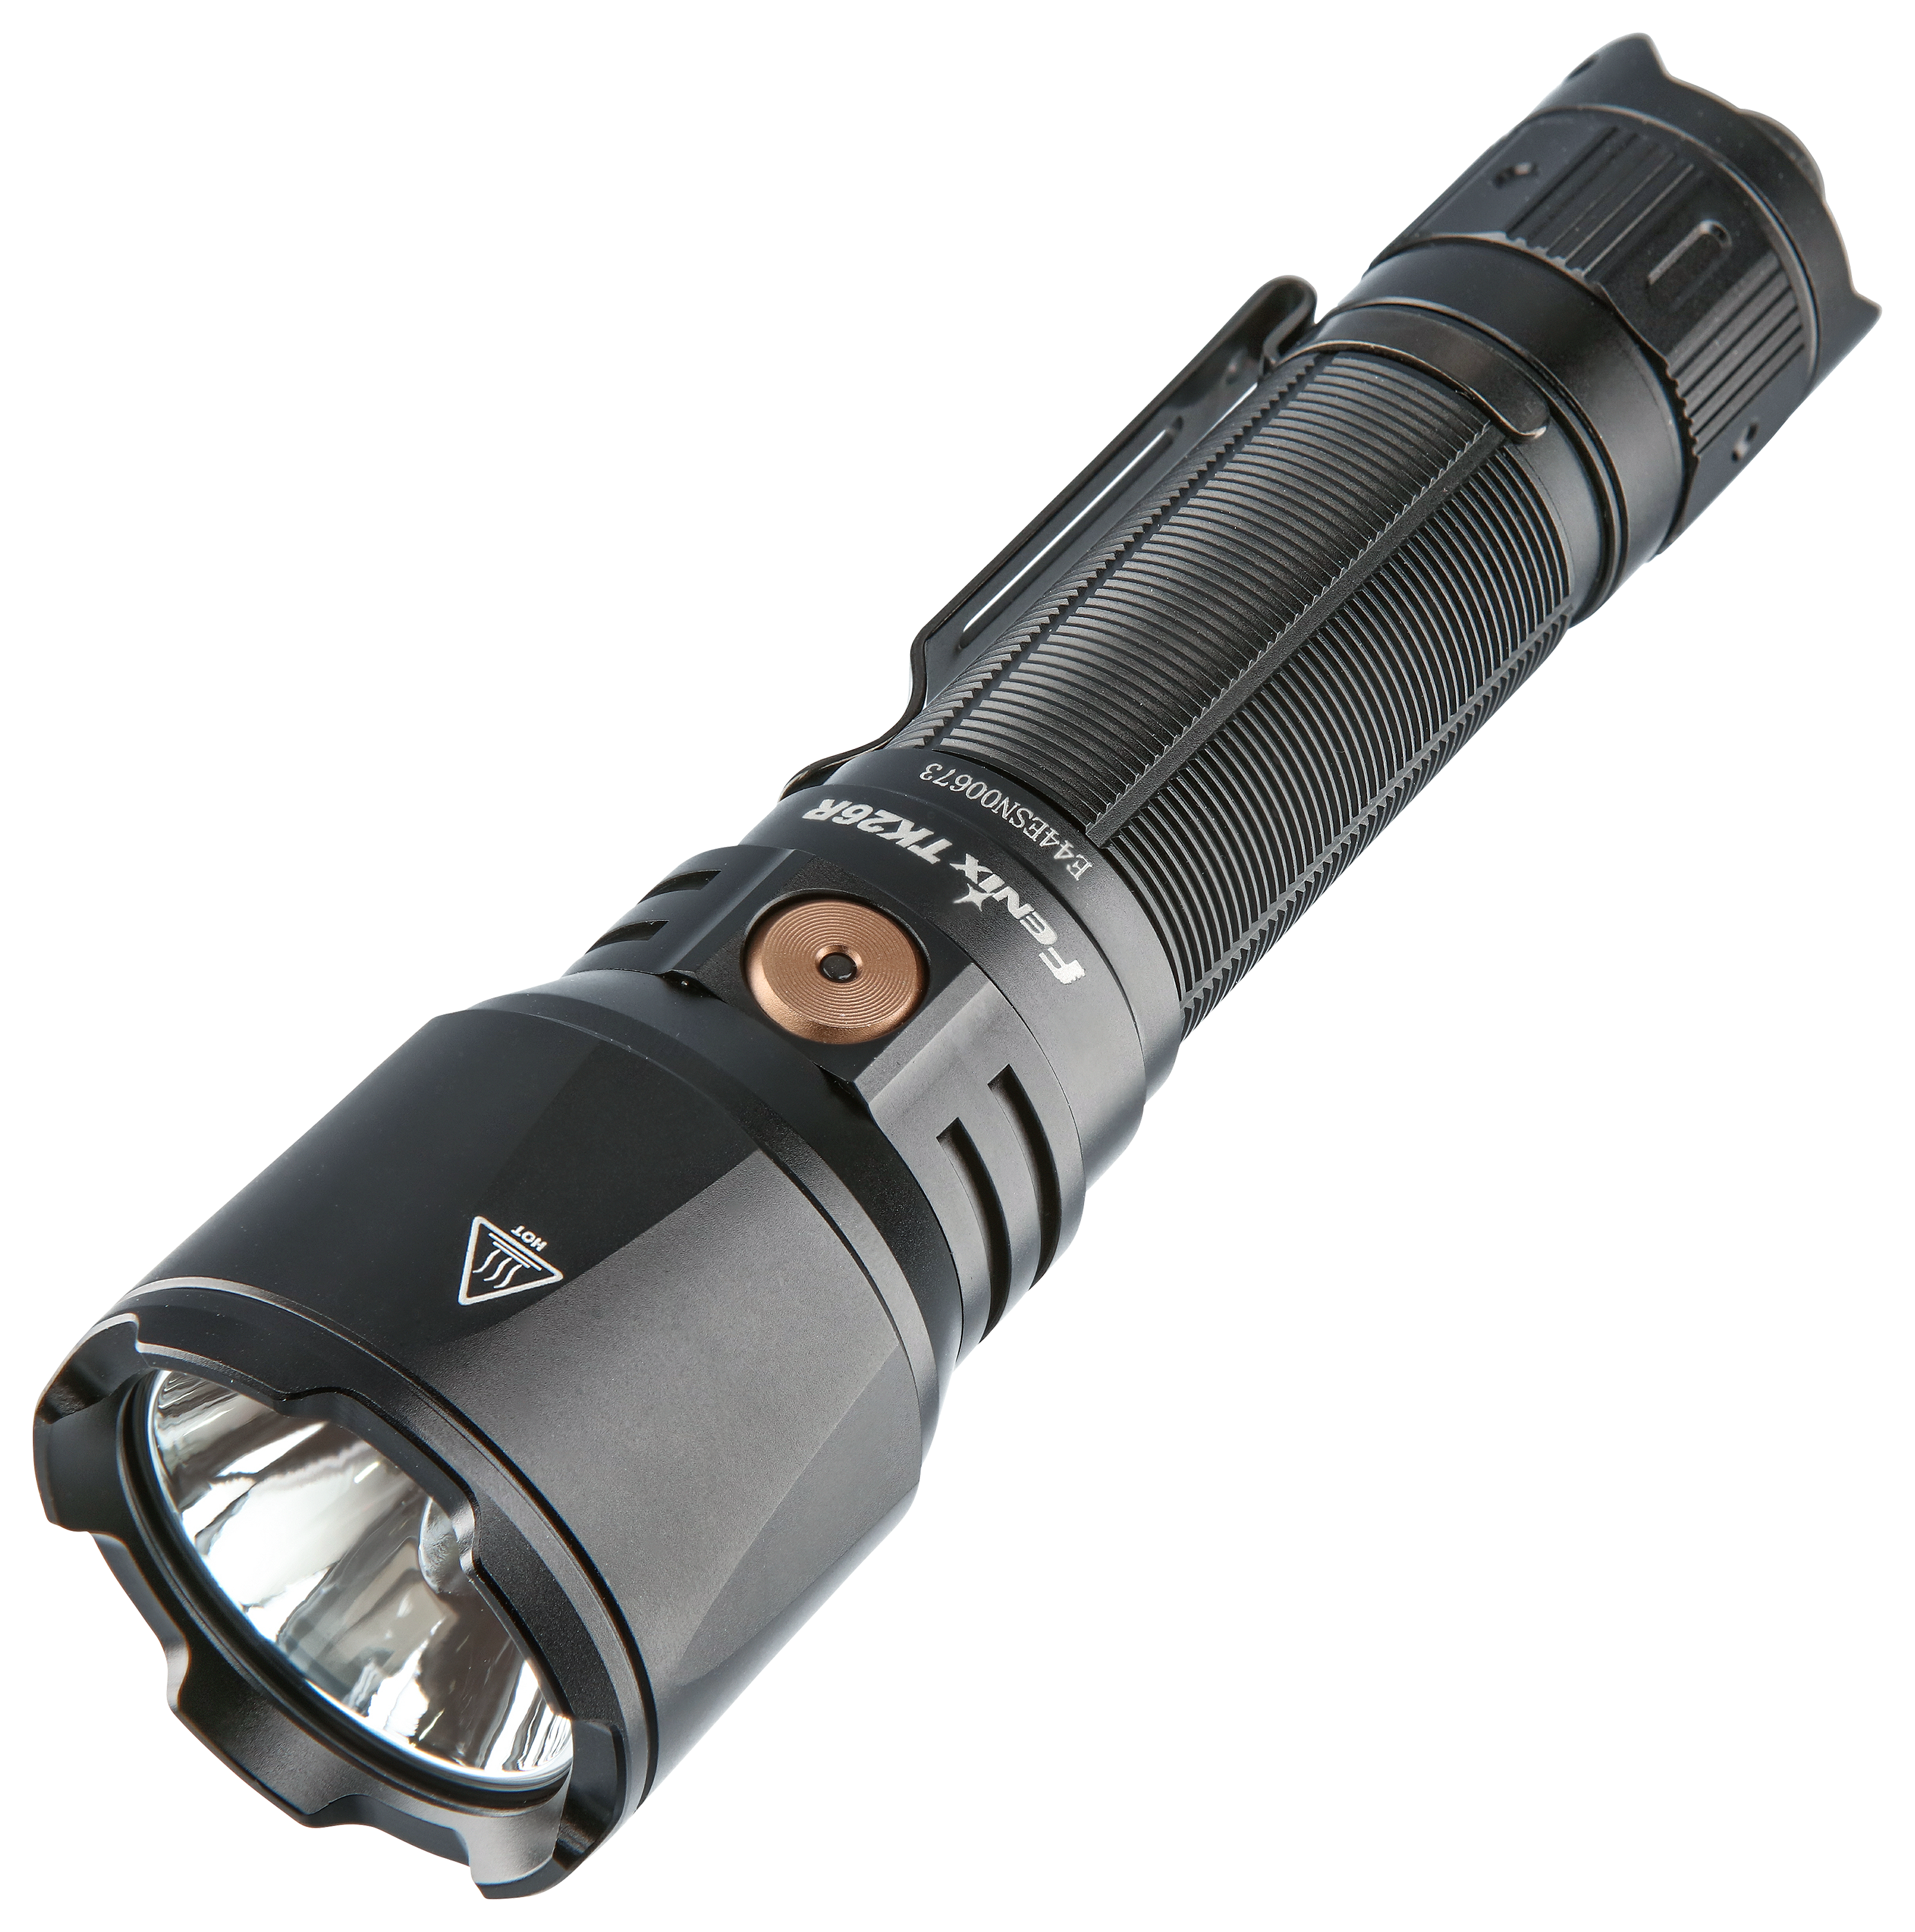 Fenix TK26R Tactical Flashlight